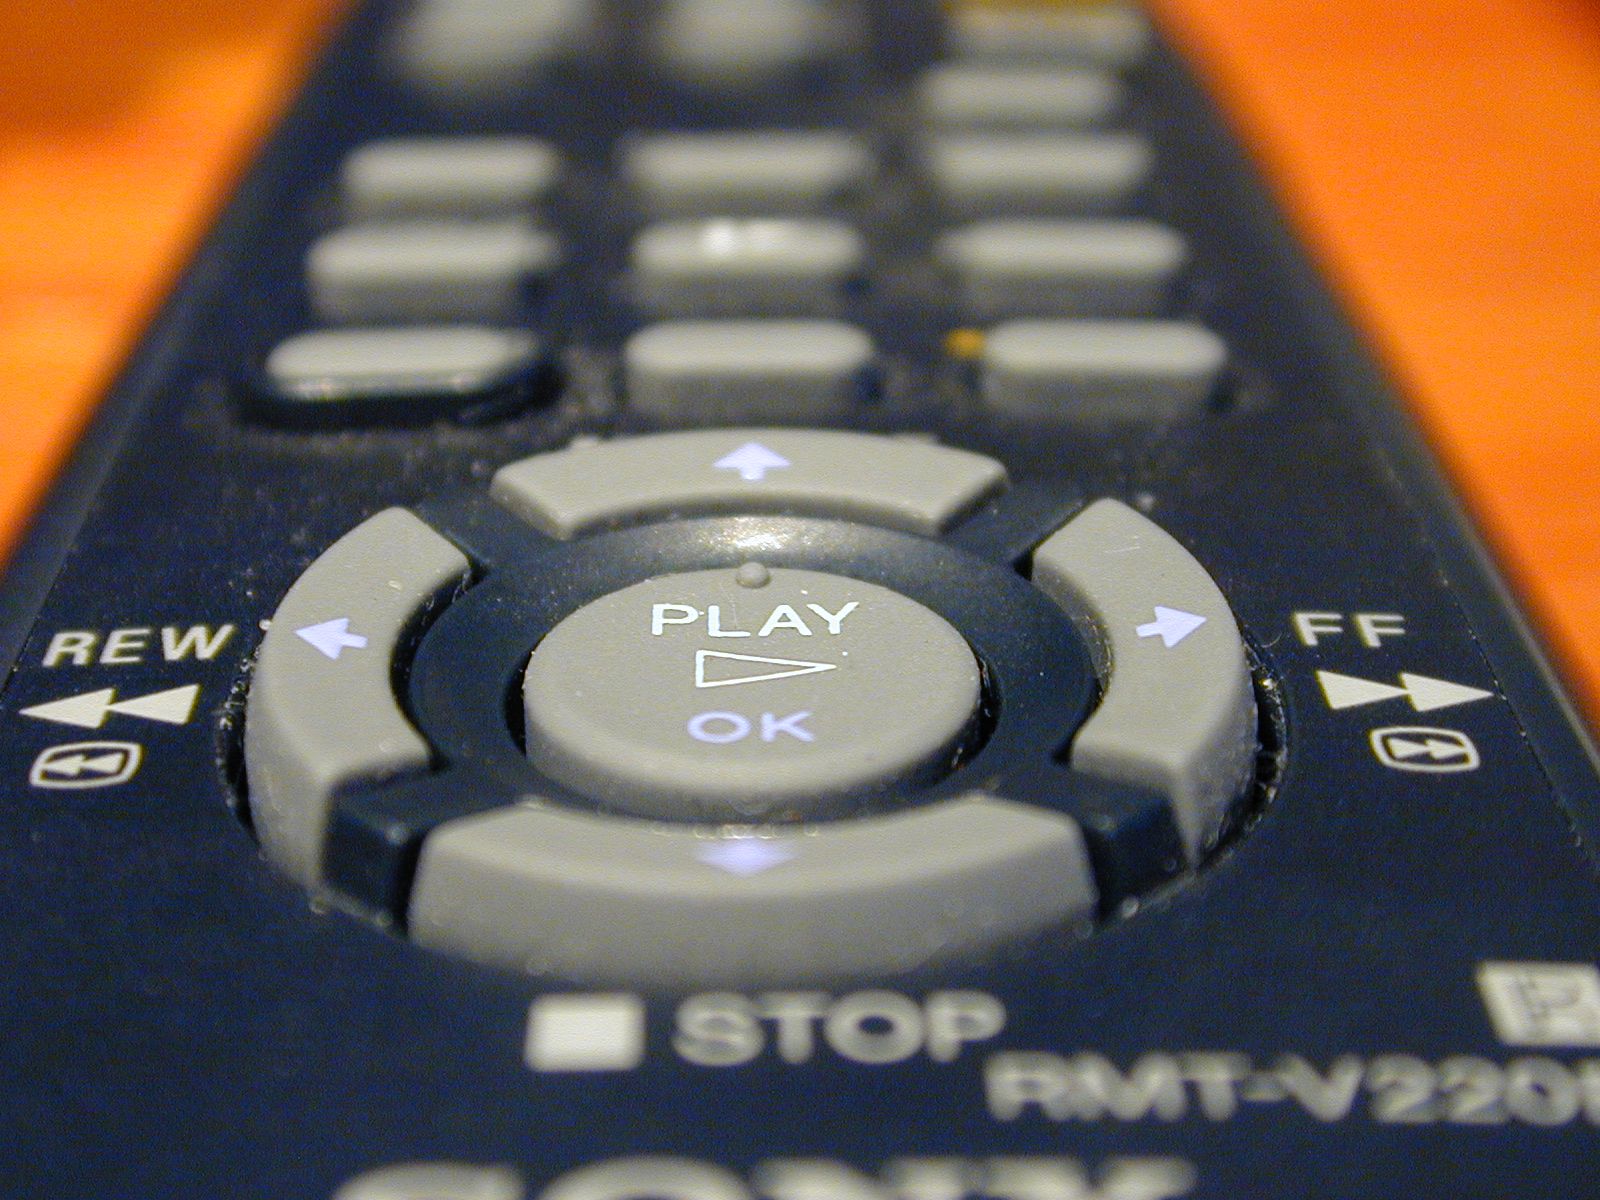 remotecontrol control play rewind rew forw forward stop typo typography modern tv television tellie hires